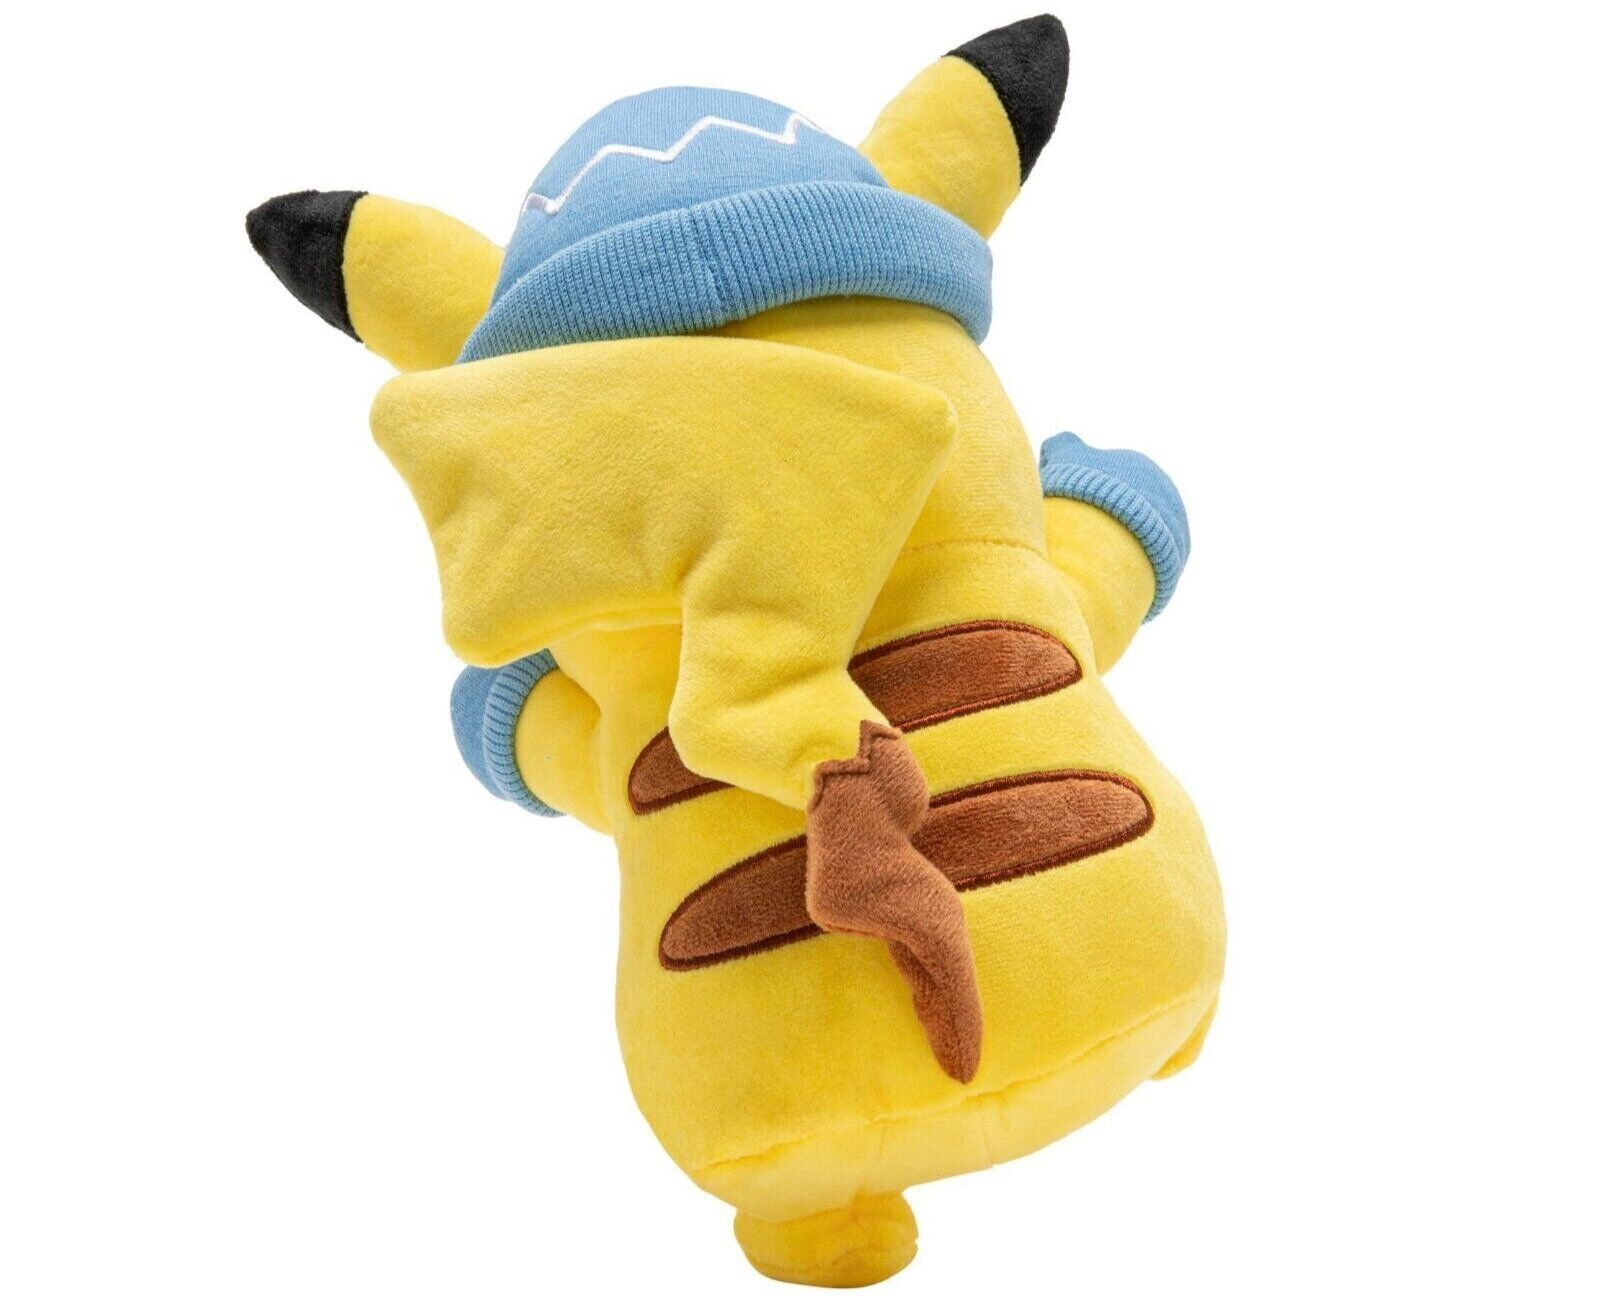 Pokemon 20cm Holiday Pikachu Blue Hat  Plush